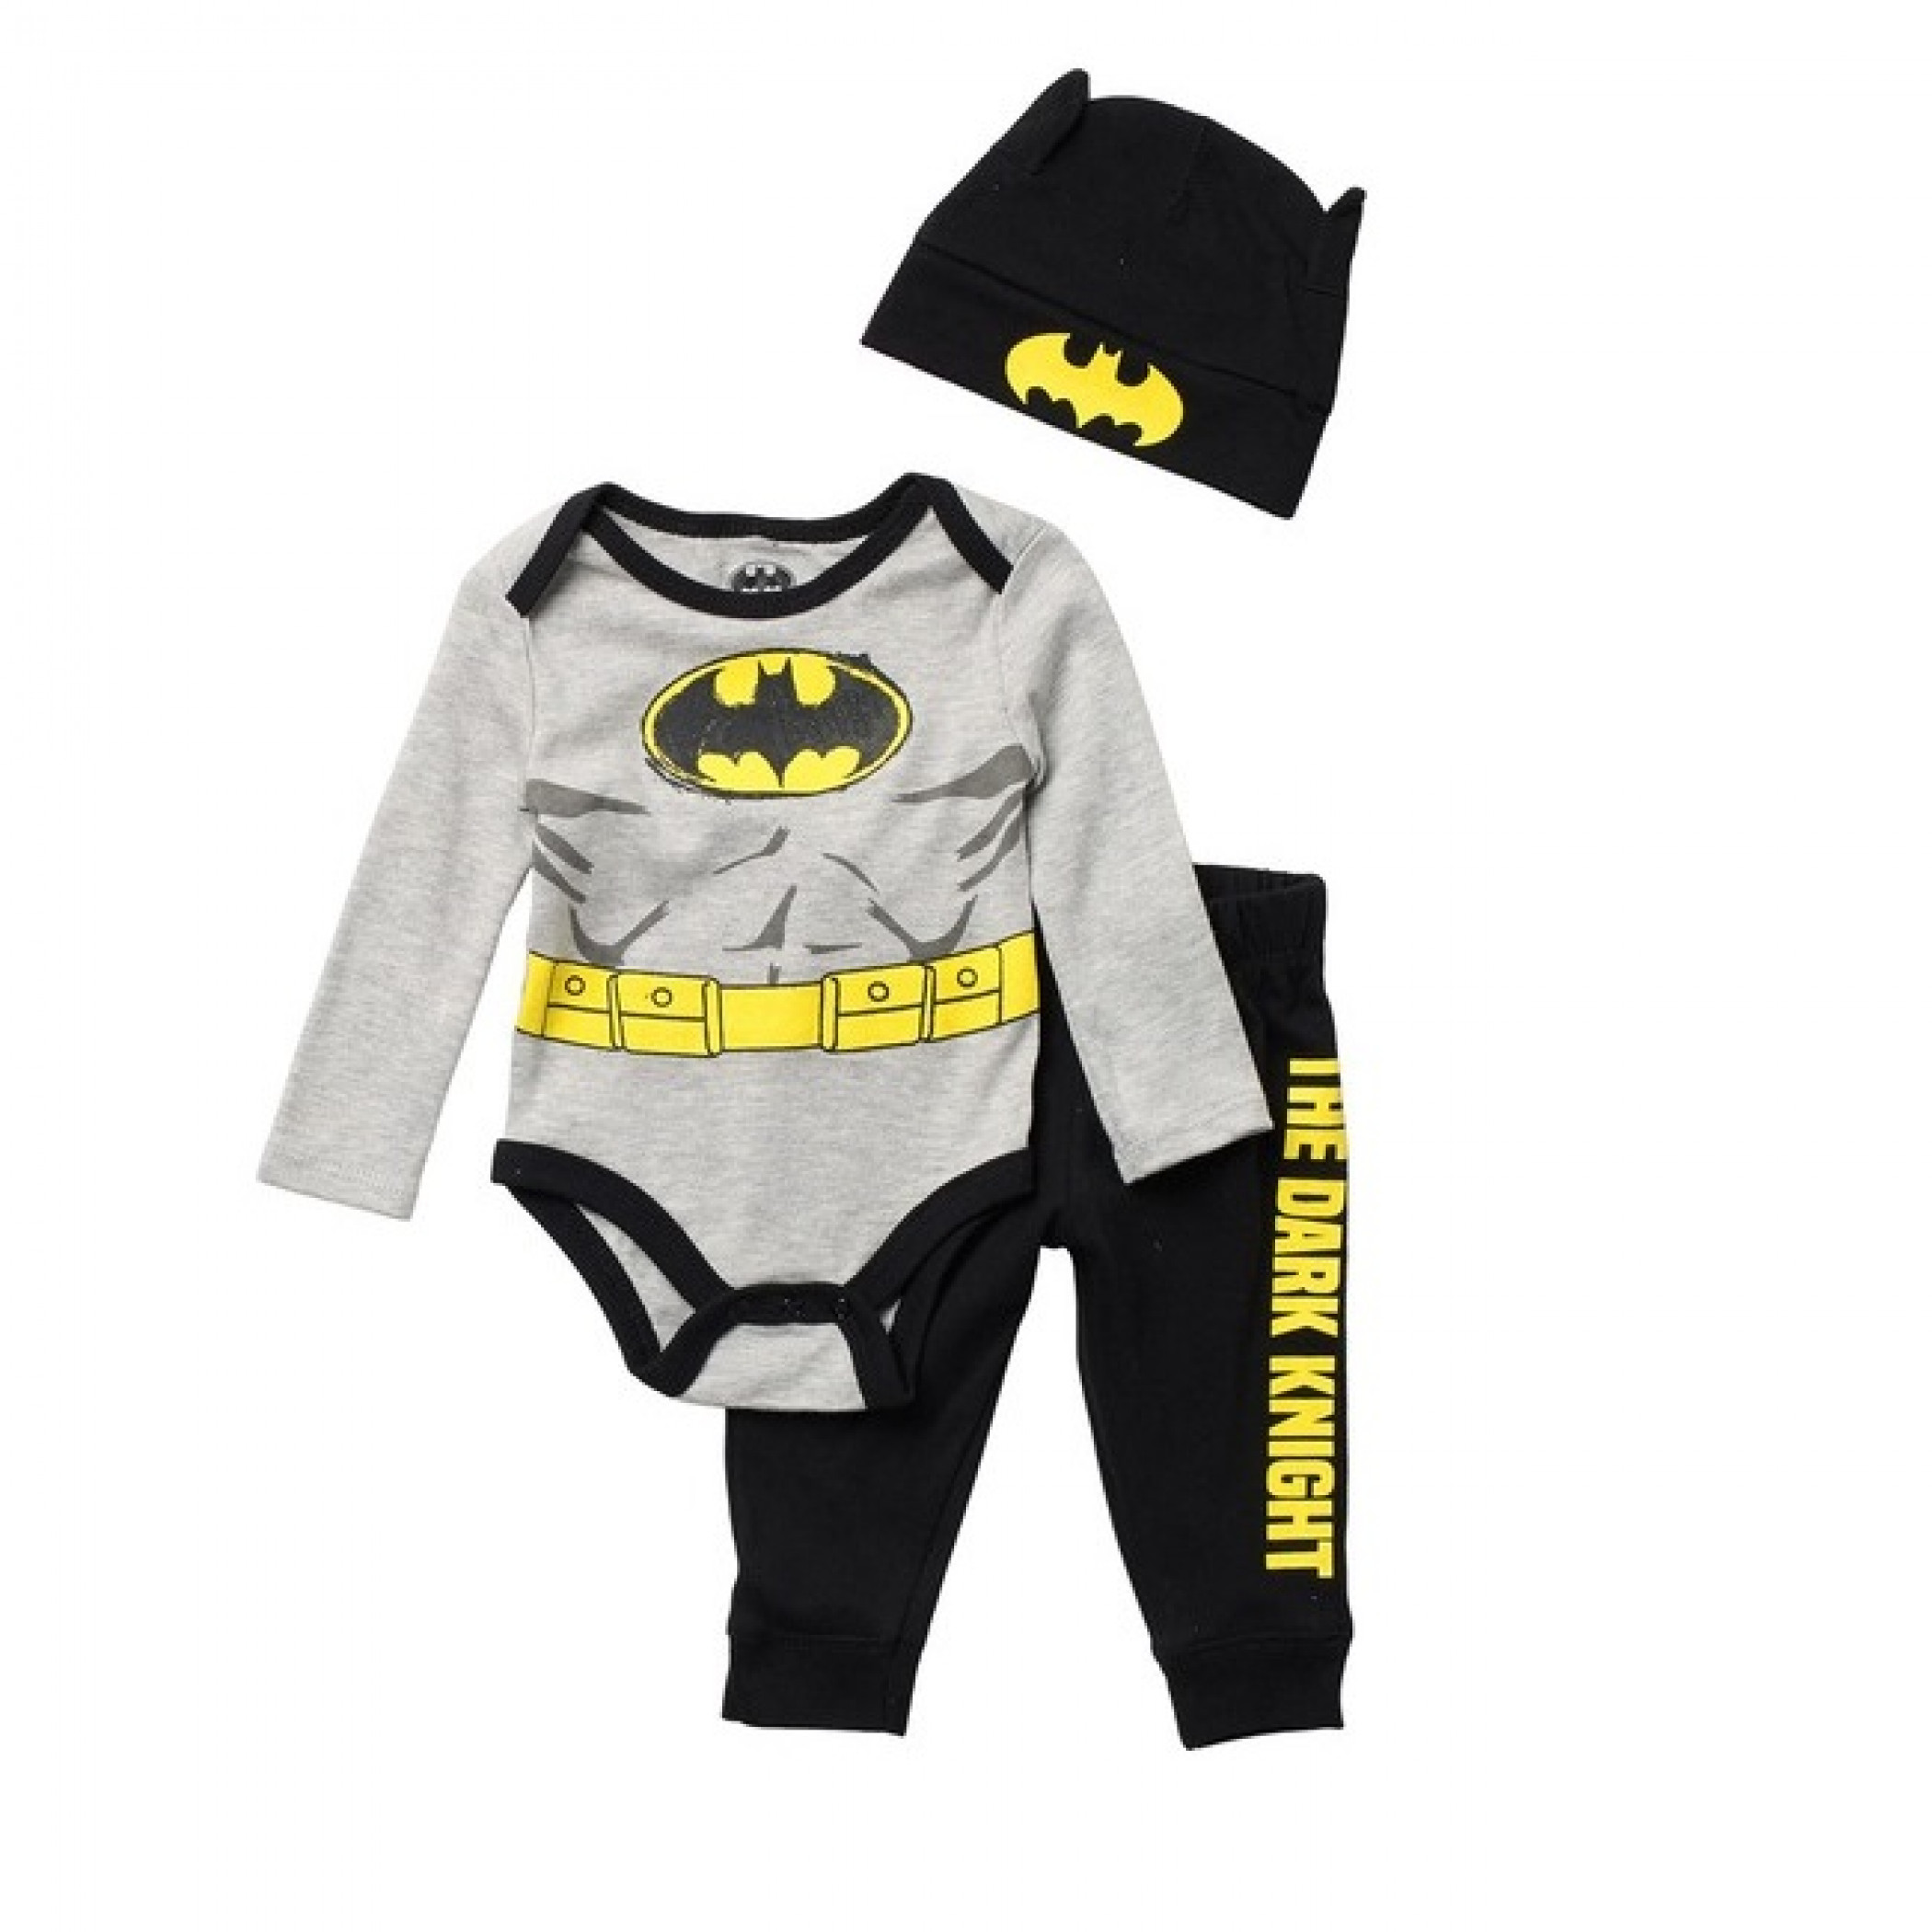 Batman The Dark Knight Costume 3-Piece Pajama Set with Hat